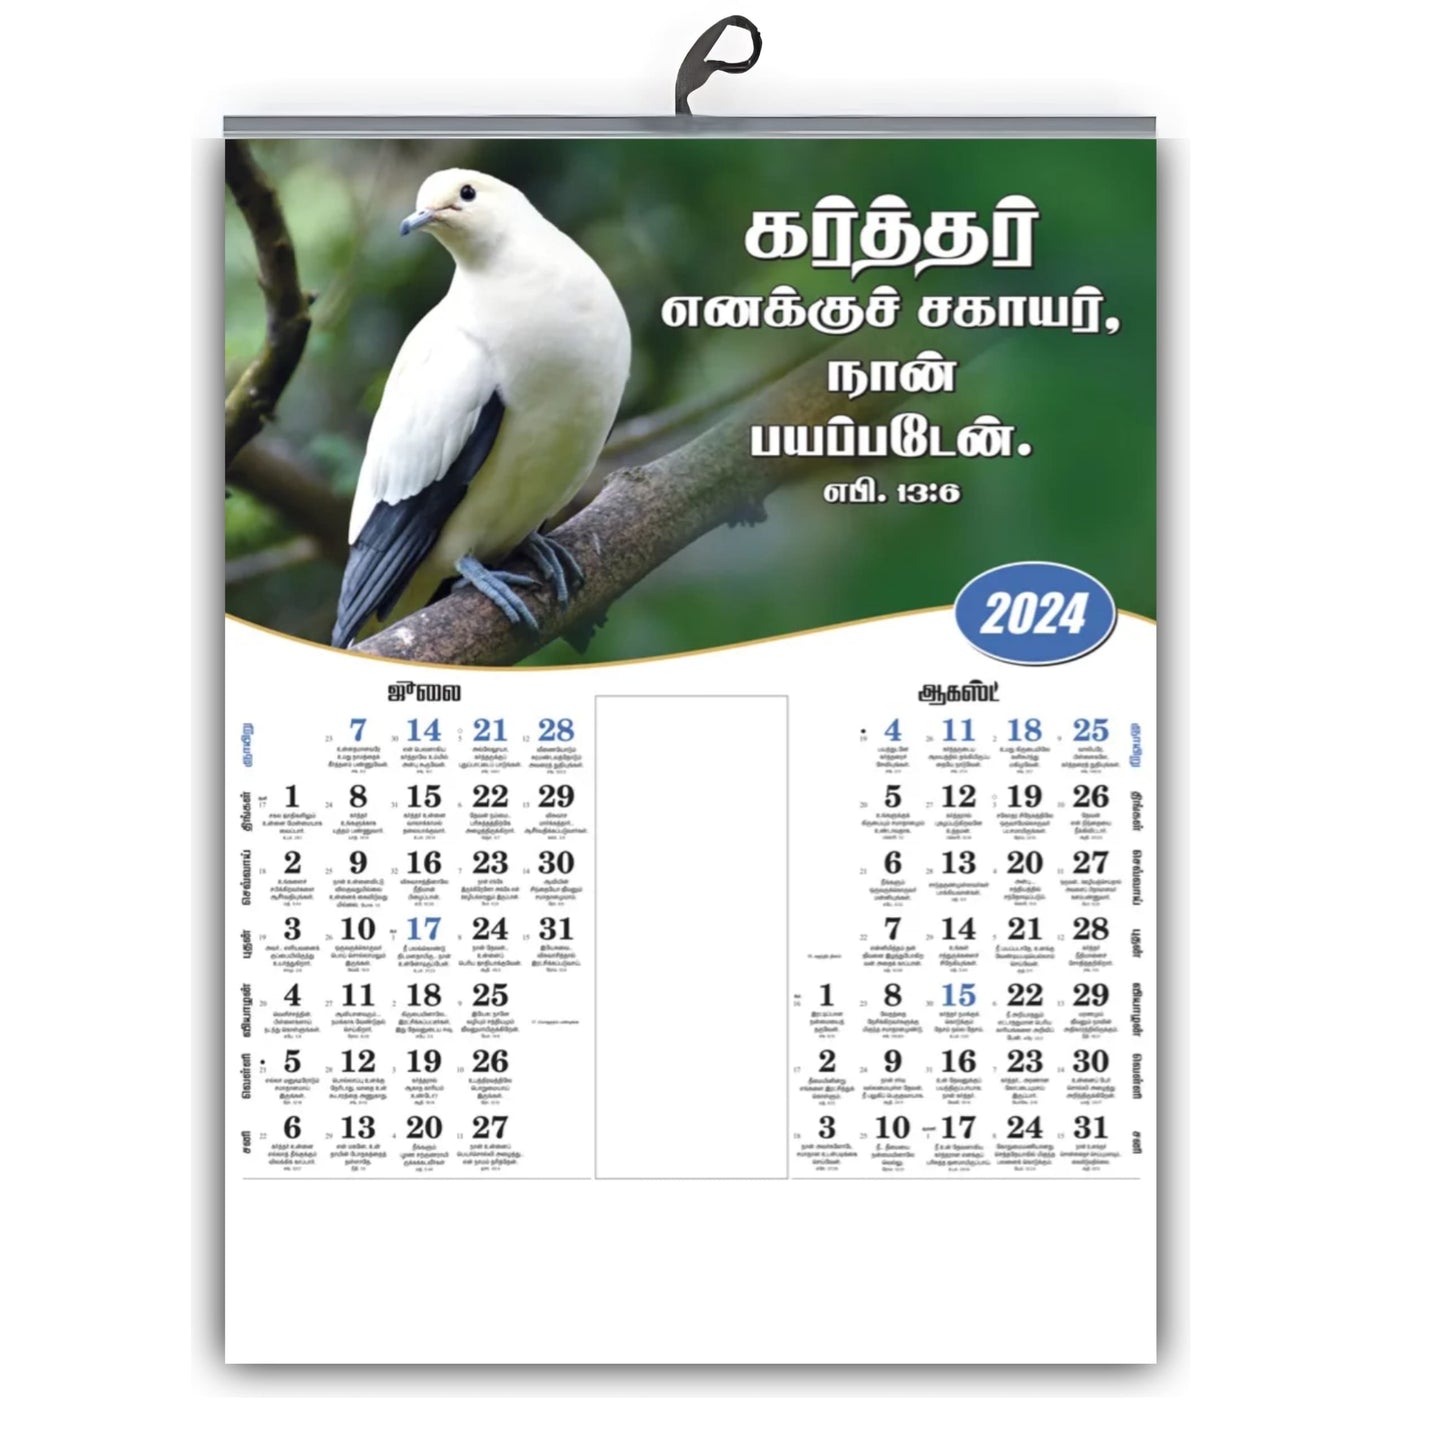 2024 Tamil Bible Verse Wall Calendar - Captivating Scenery & Uplifting Verses